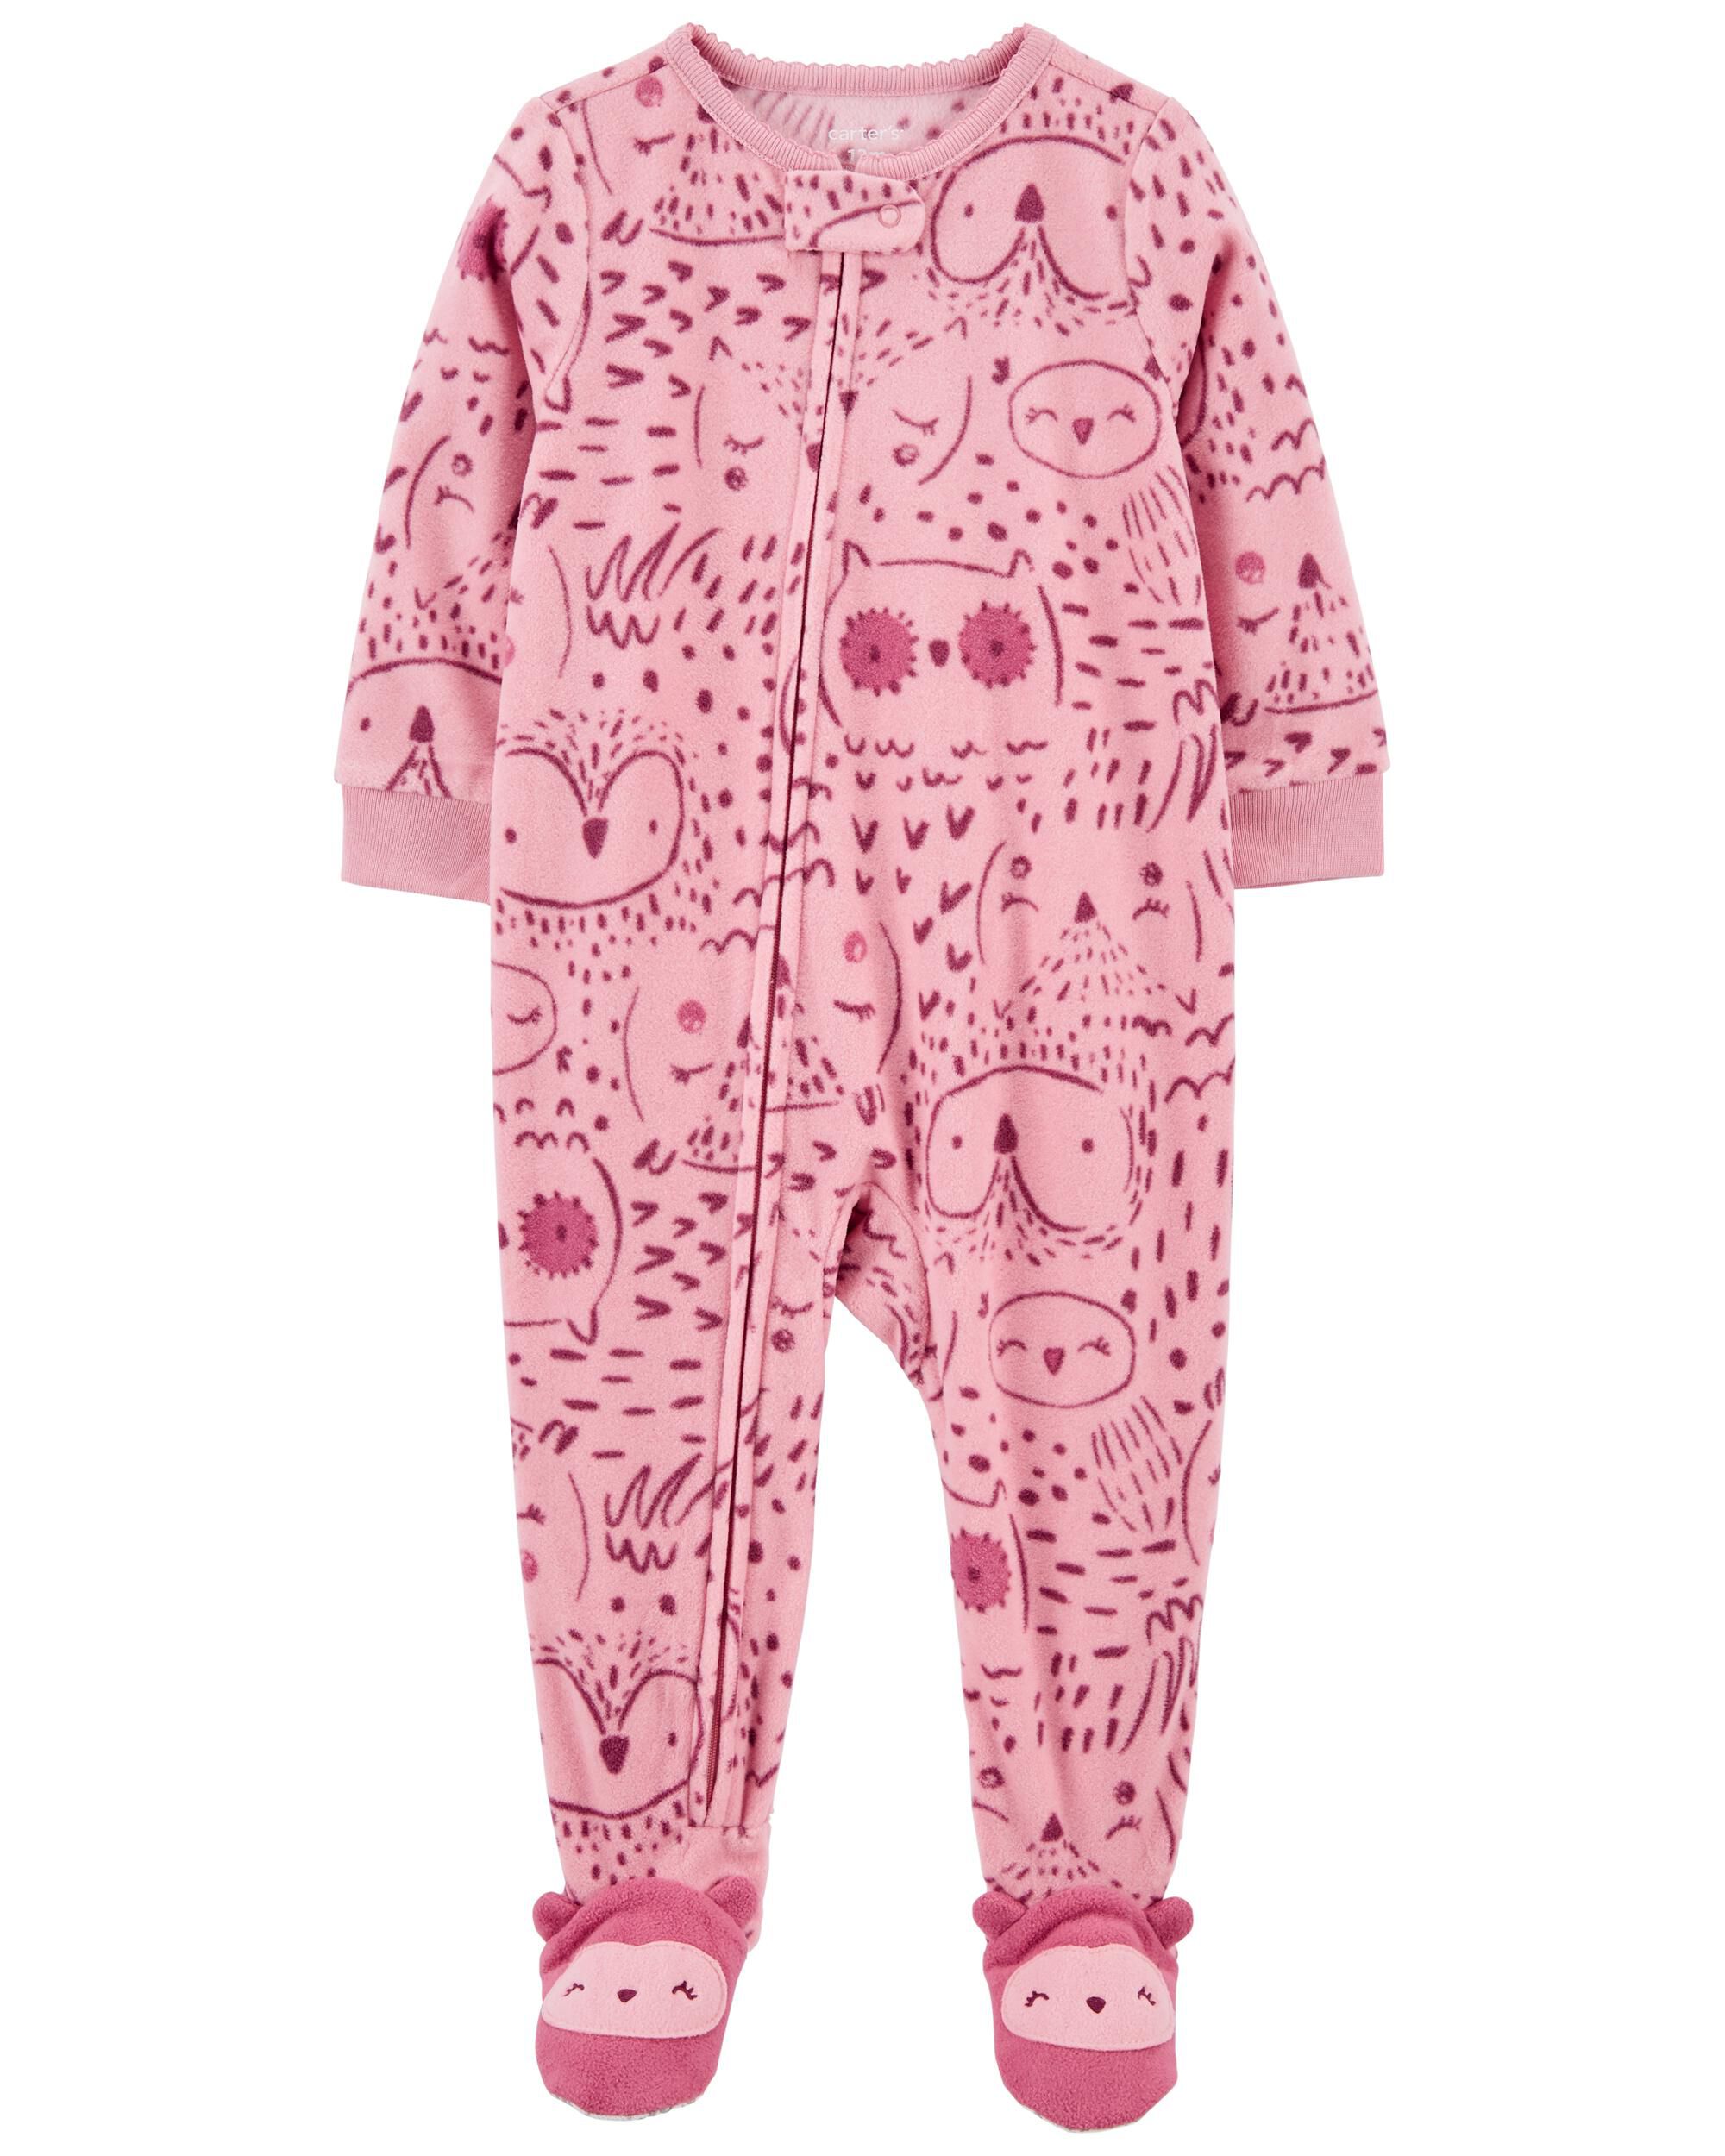 Carters Girls Toddler 2-Pack Loose Fit Fleece Footed Pajamas 